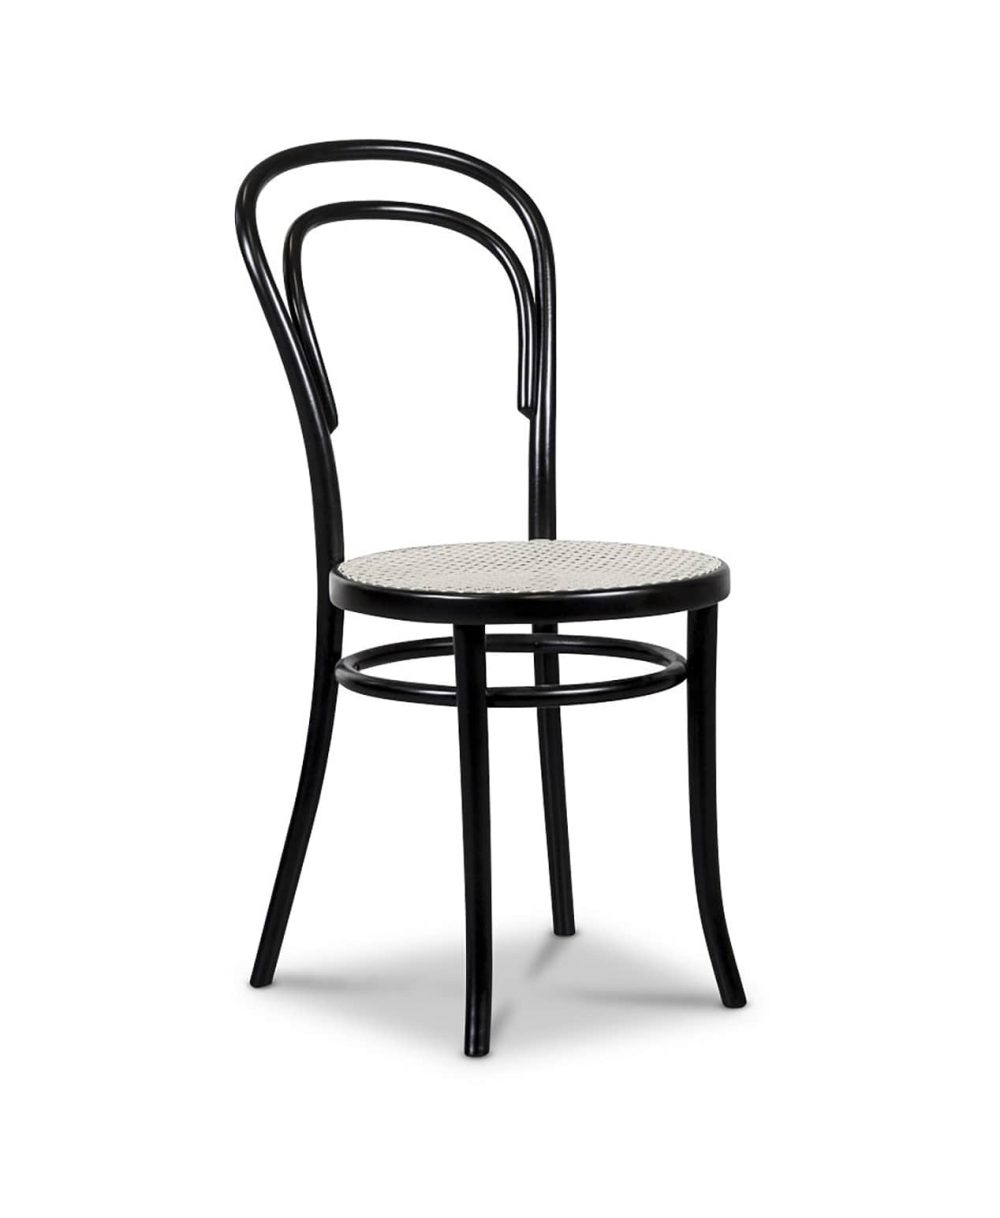 flexwood-no14-chair-black-profile.jpg